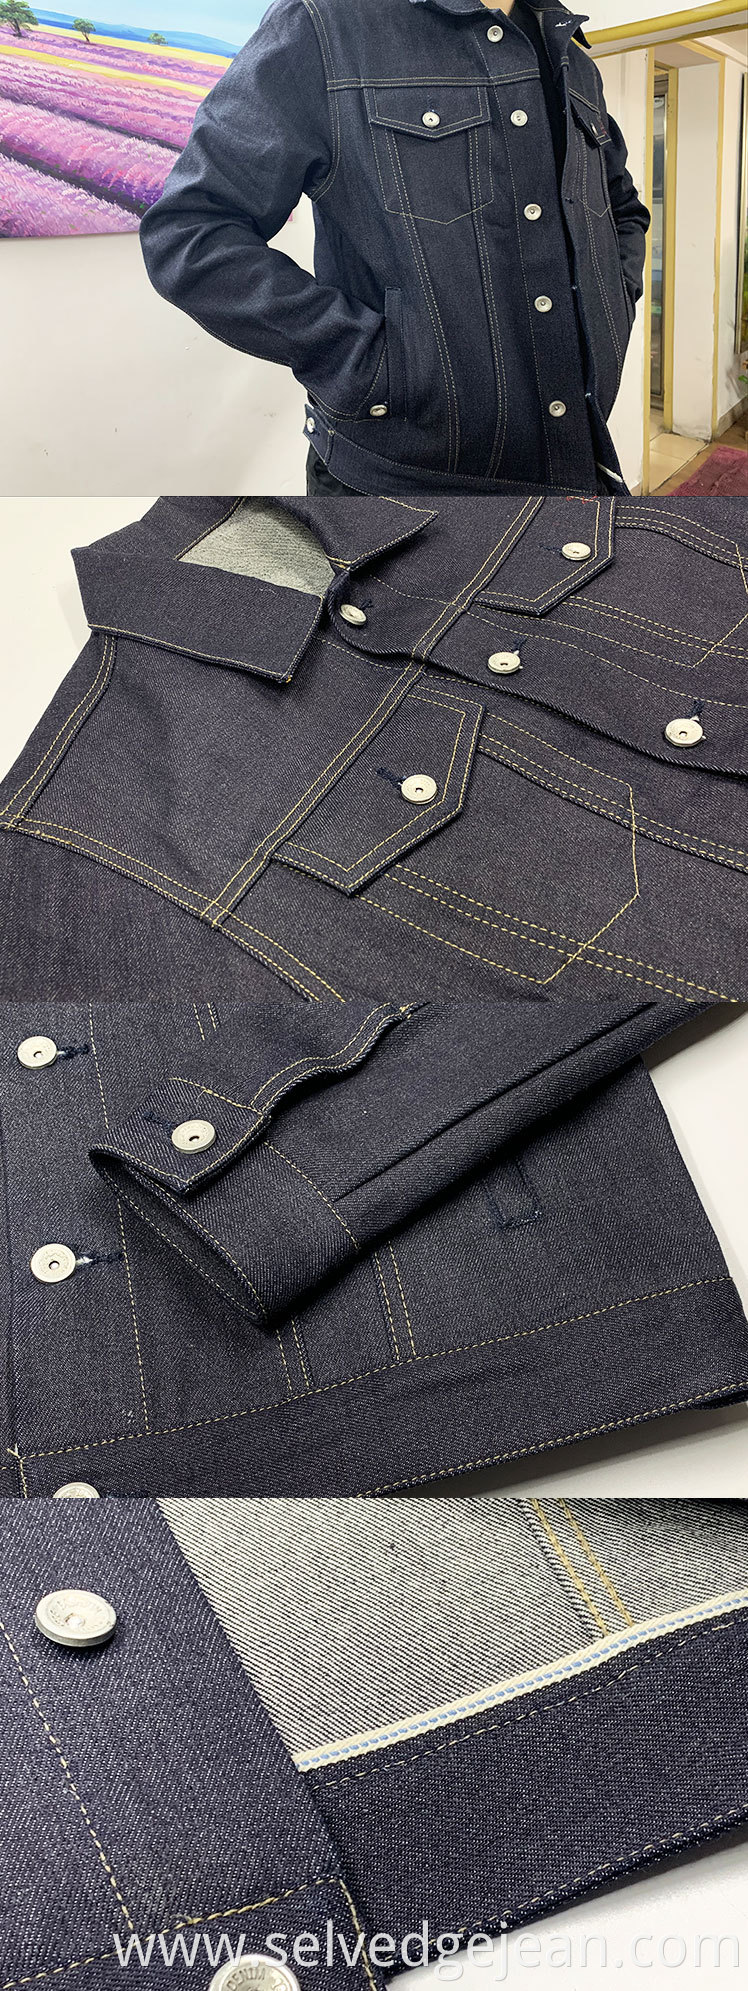 jeans raw denim fabric popular in bangladesh wholese price rolls of raw denim fabric for vintage denim jacket